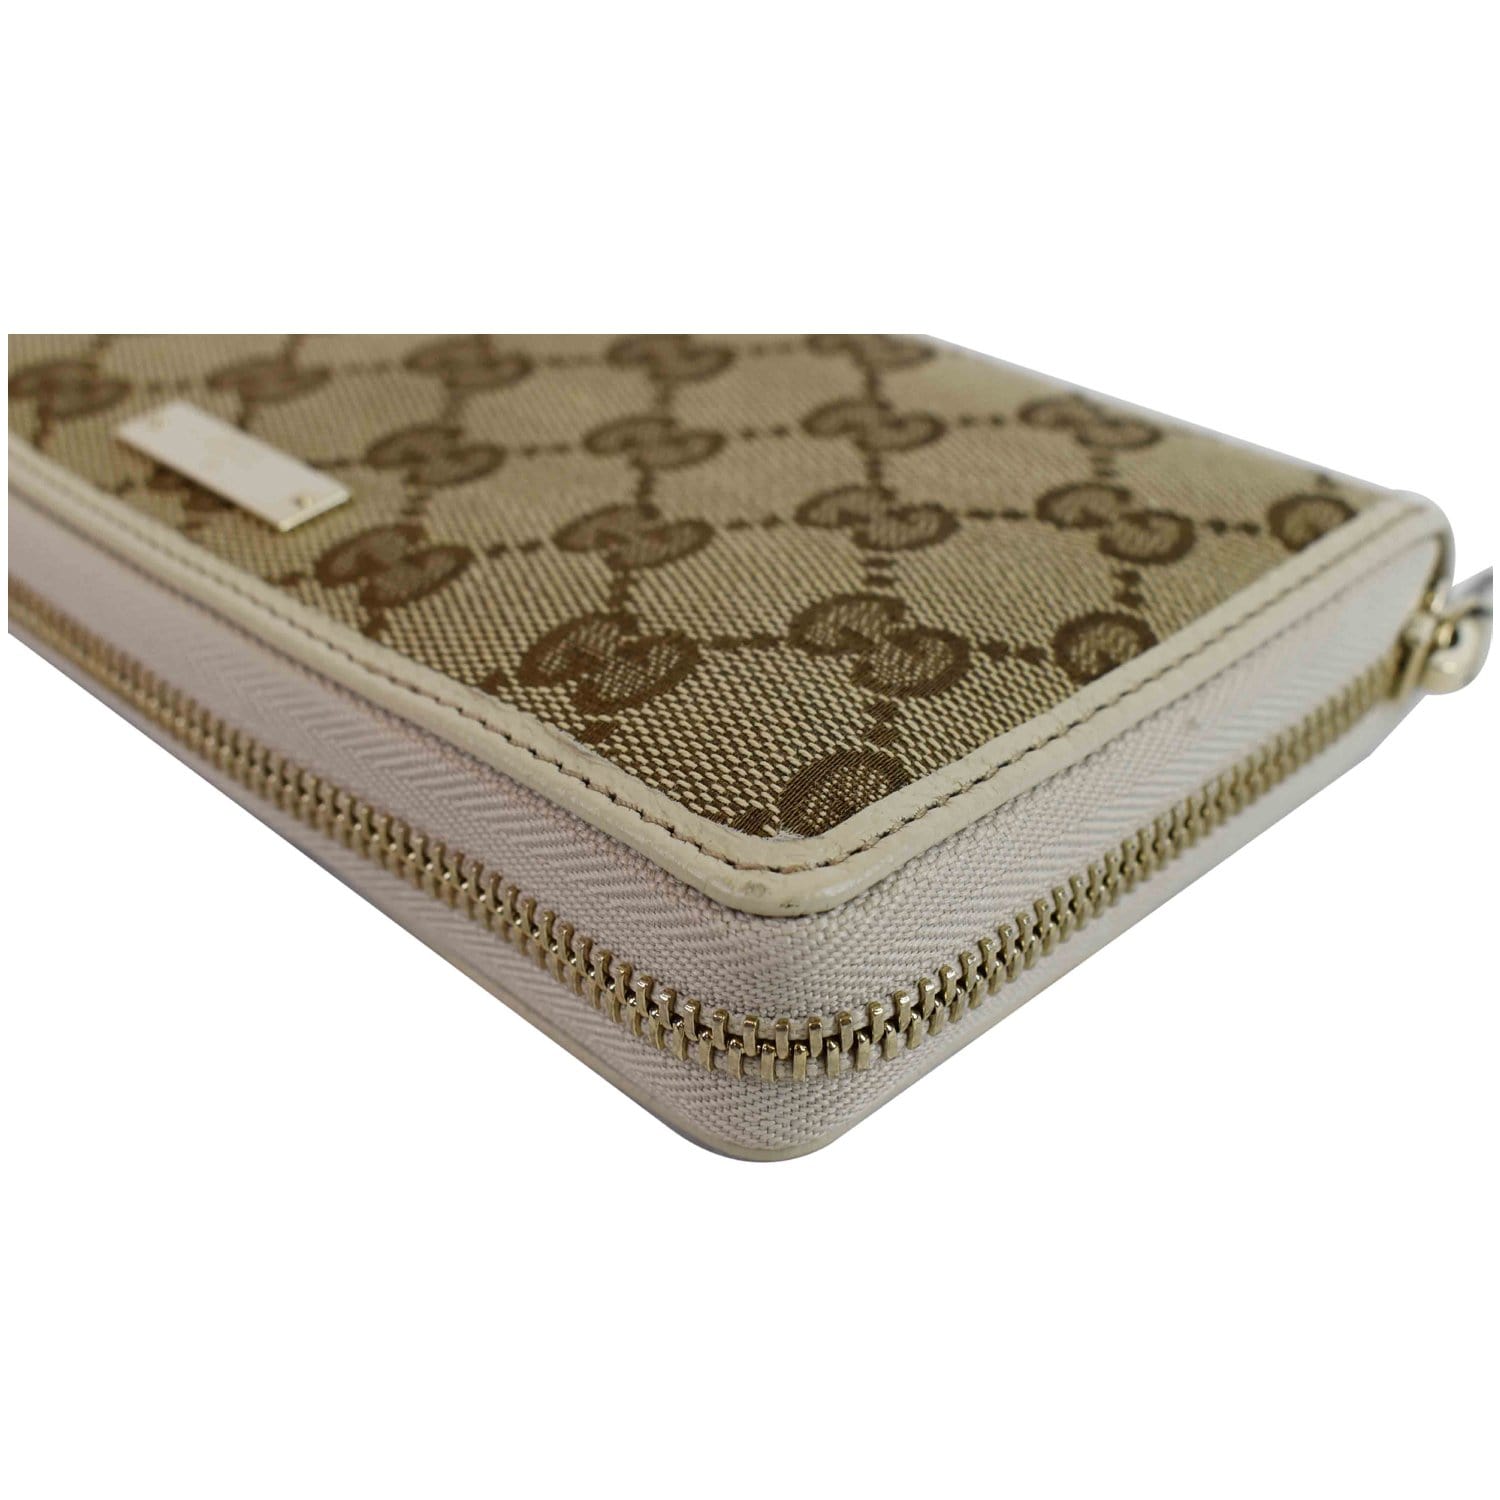 Gucci GG Abbey Long Wallet